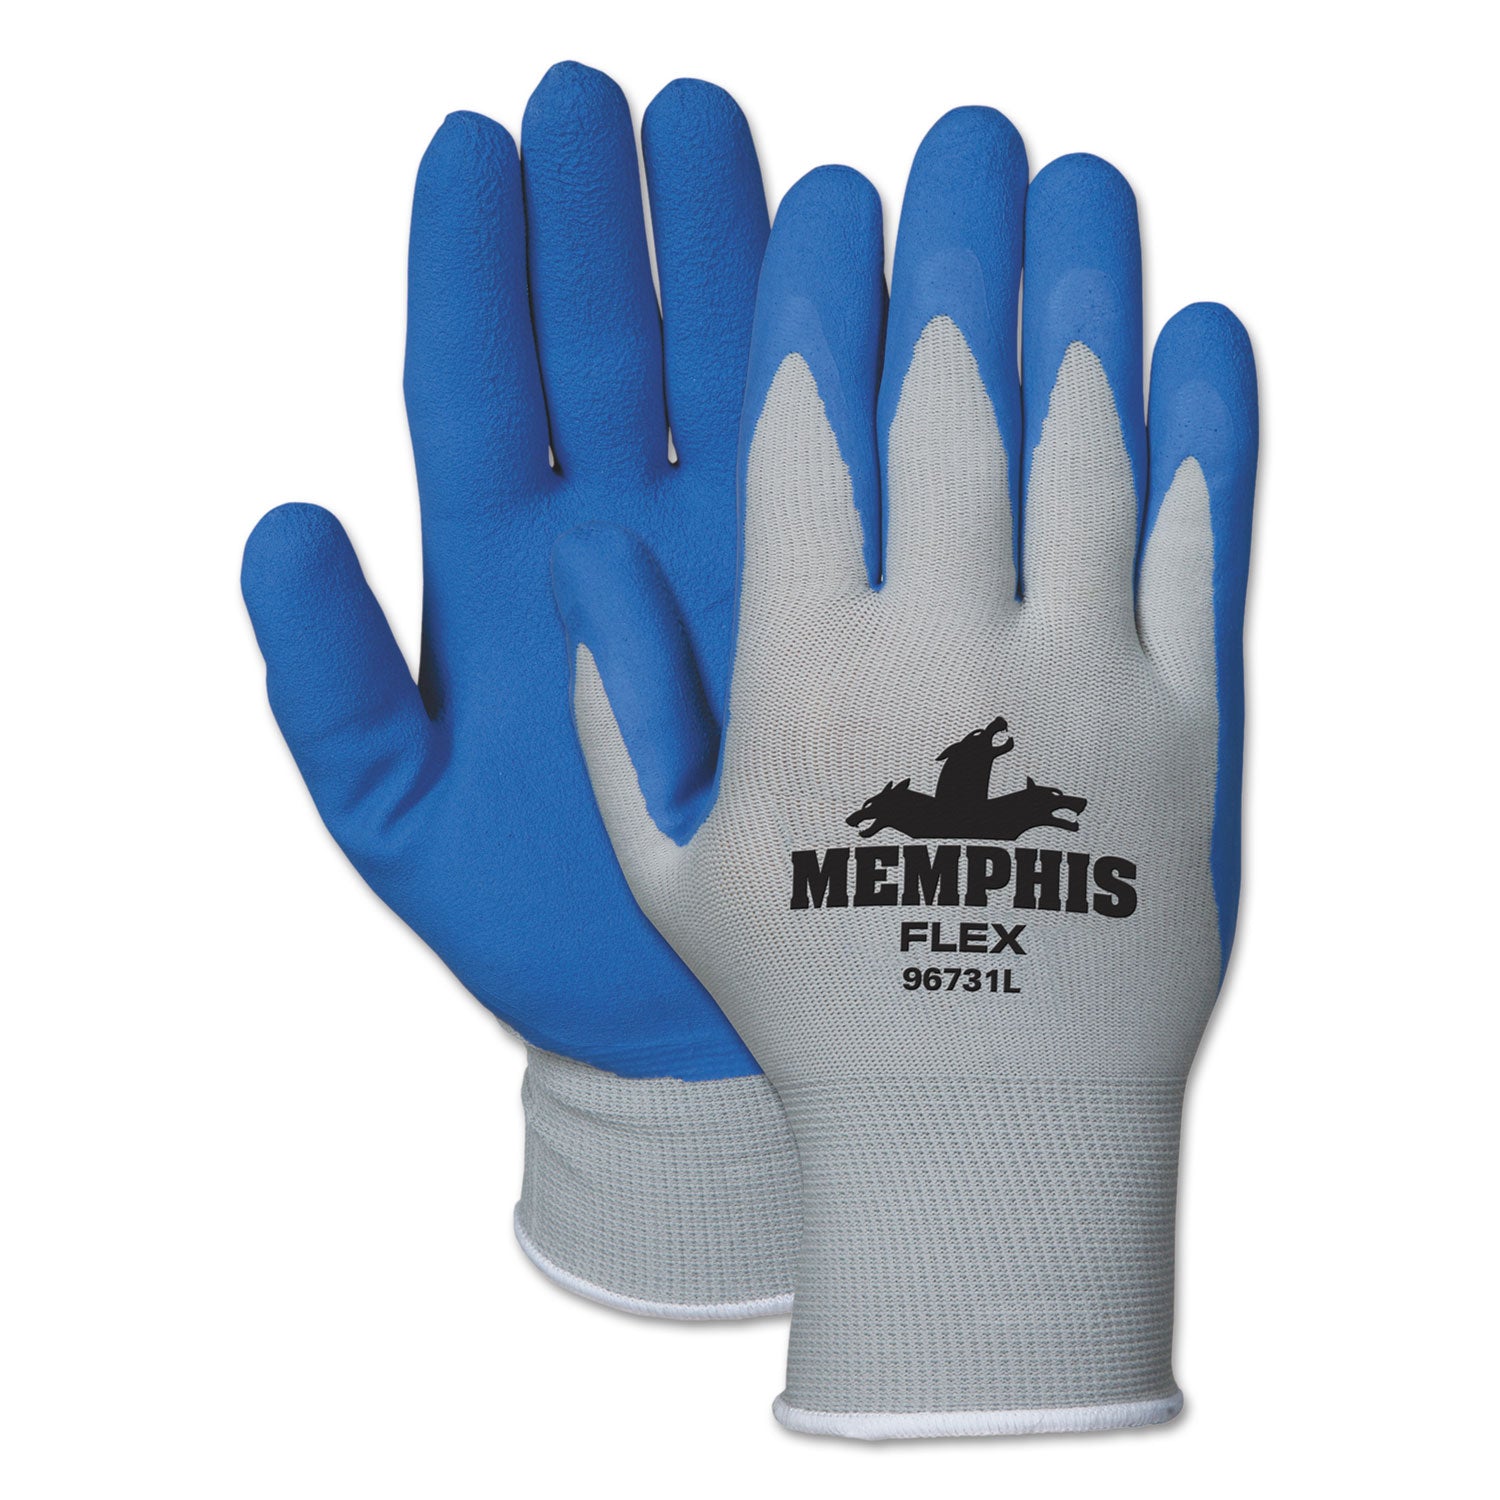 memphis-flex-seamless-nylon-knit-gloves-small-blue-gray-dozen_crw96731sdz - 1